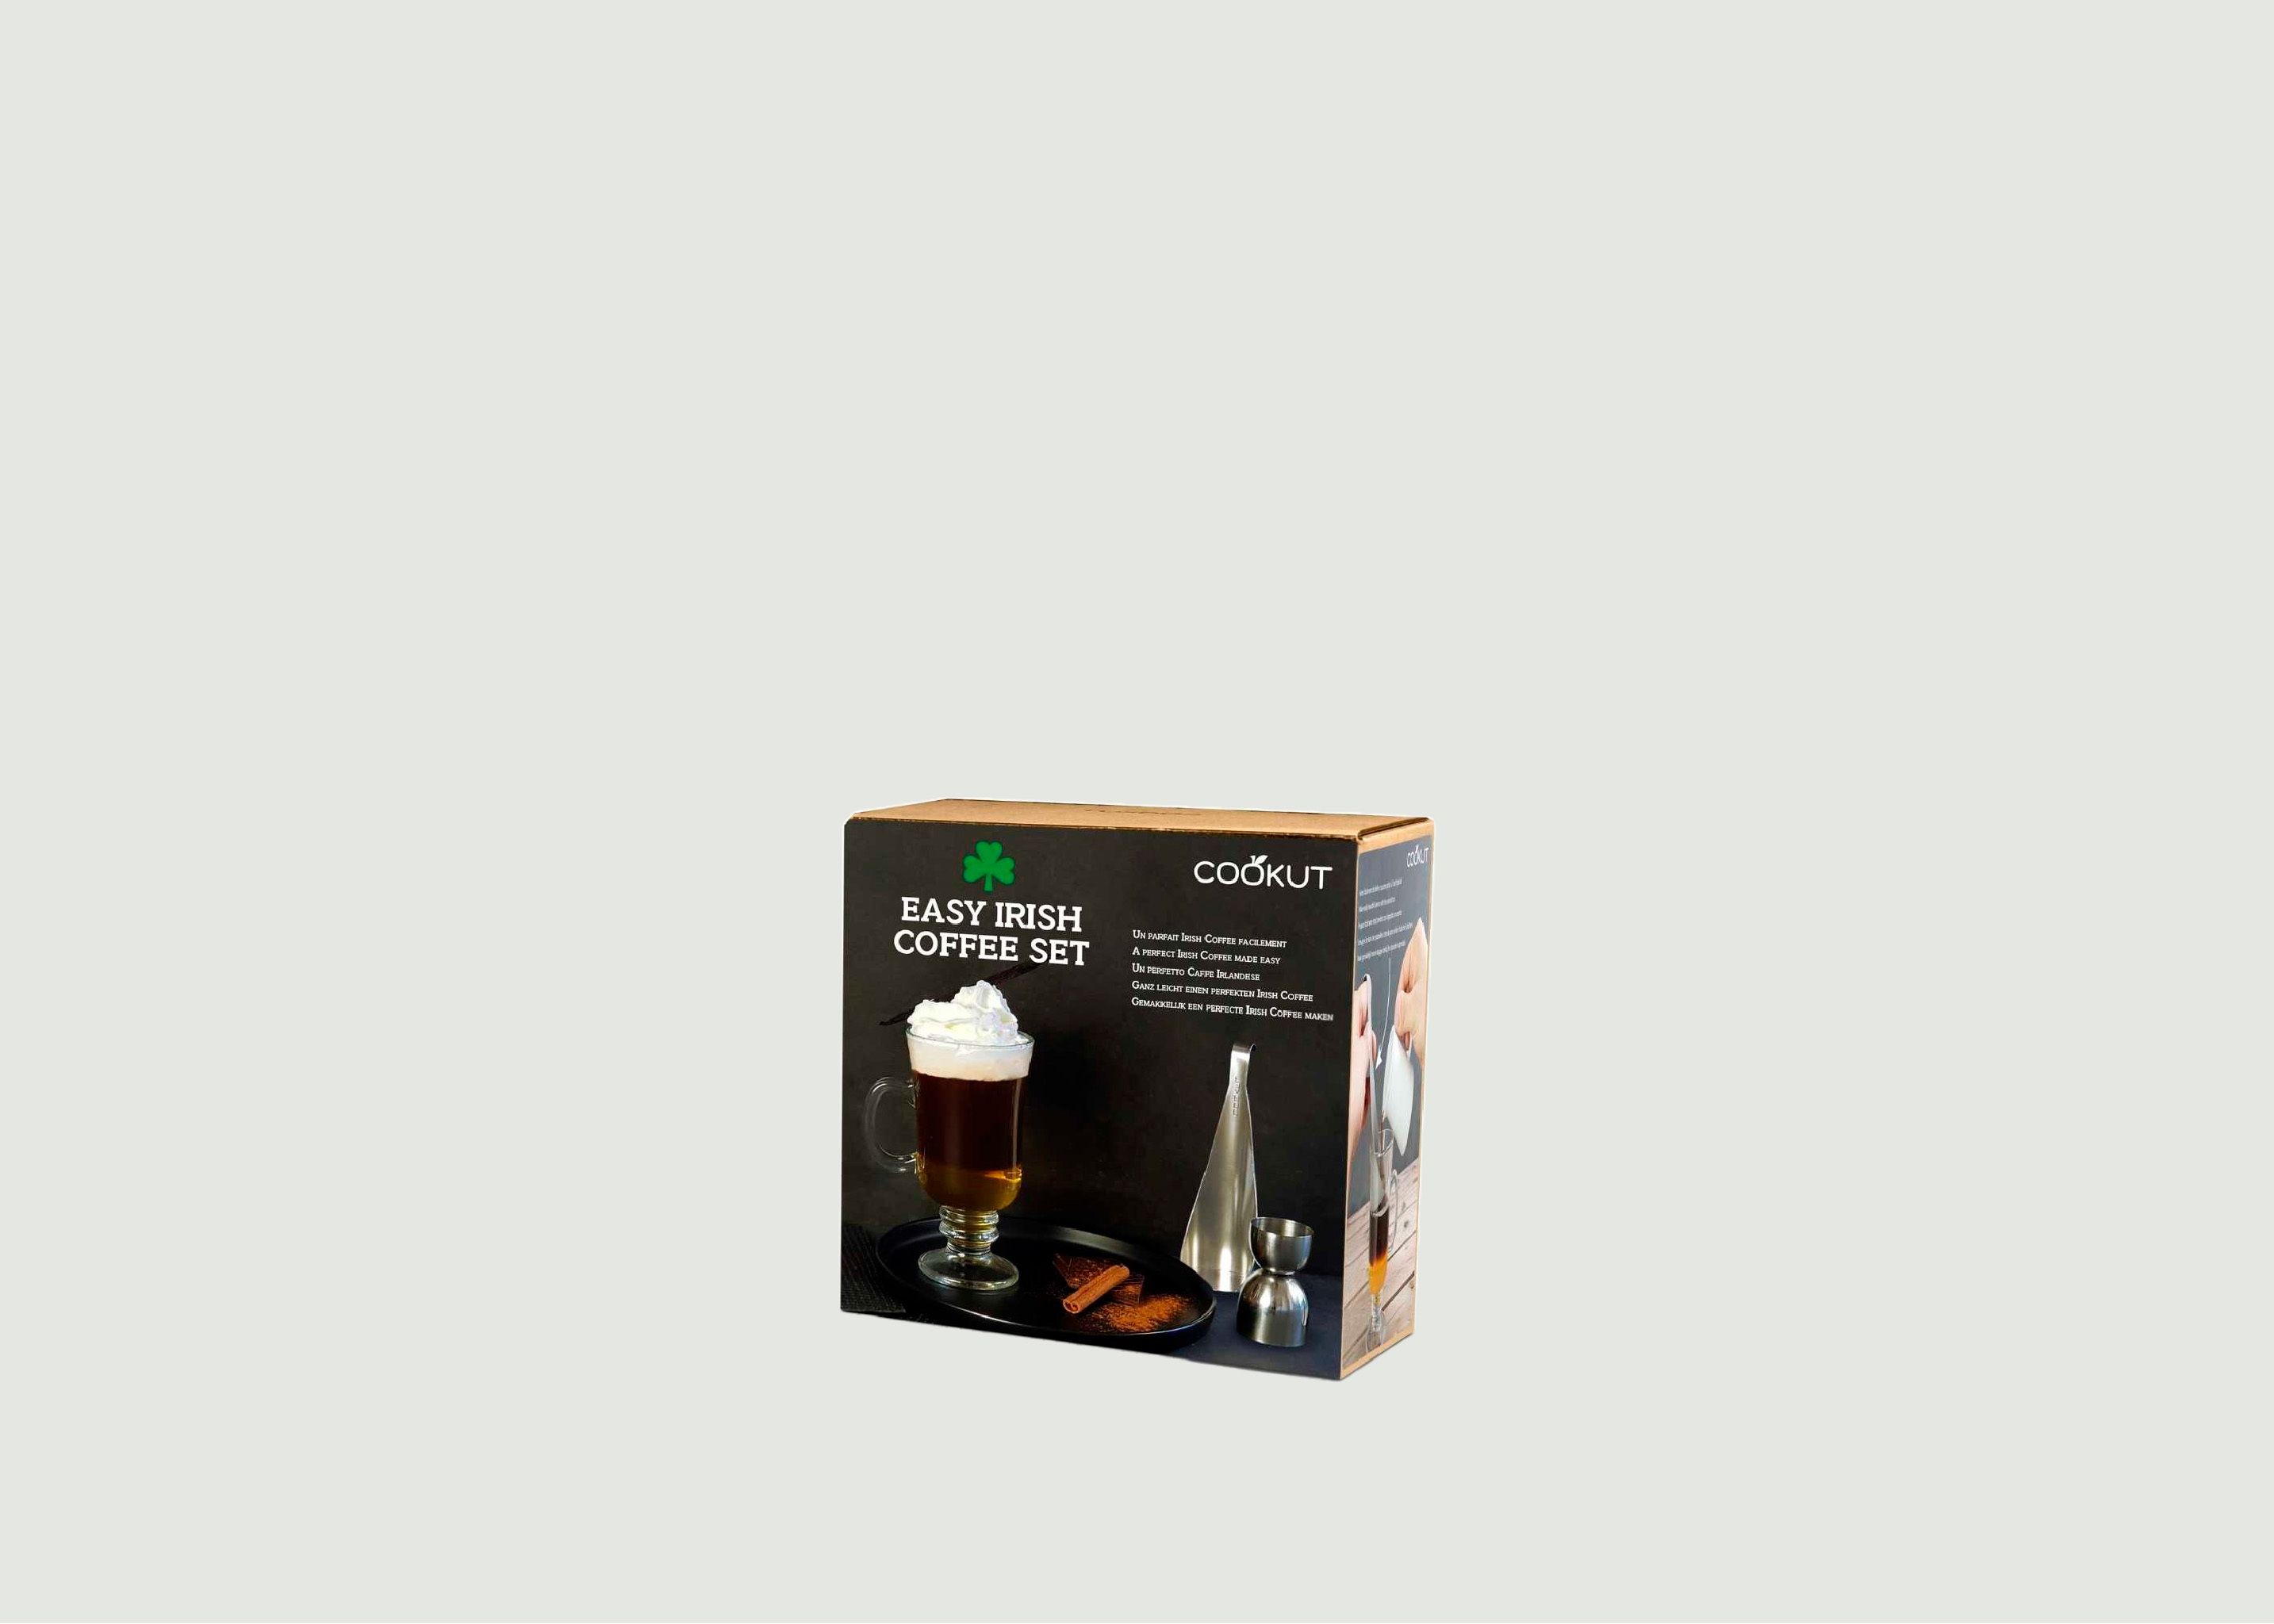 Coffret pour Irish Coffee Facile COOKUT